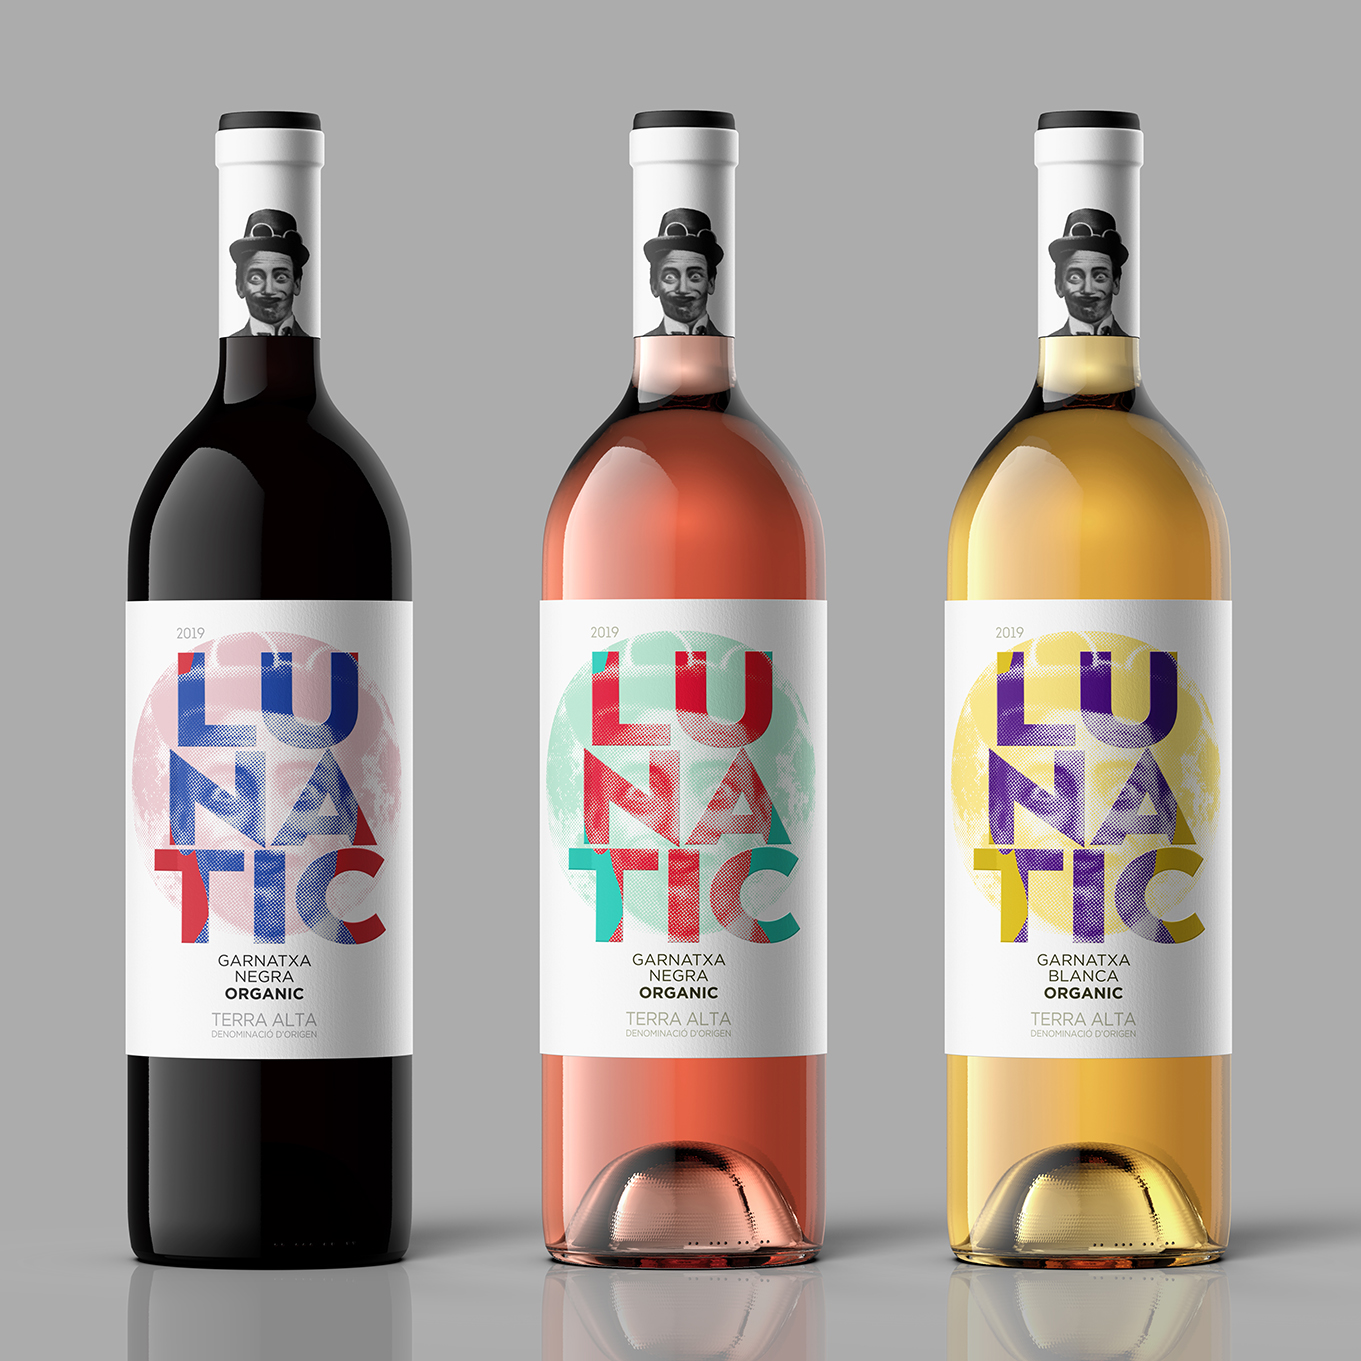 EPICA Creates Label Design for New Range of Wines